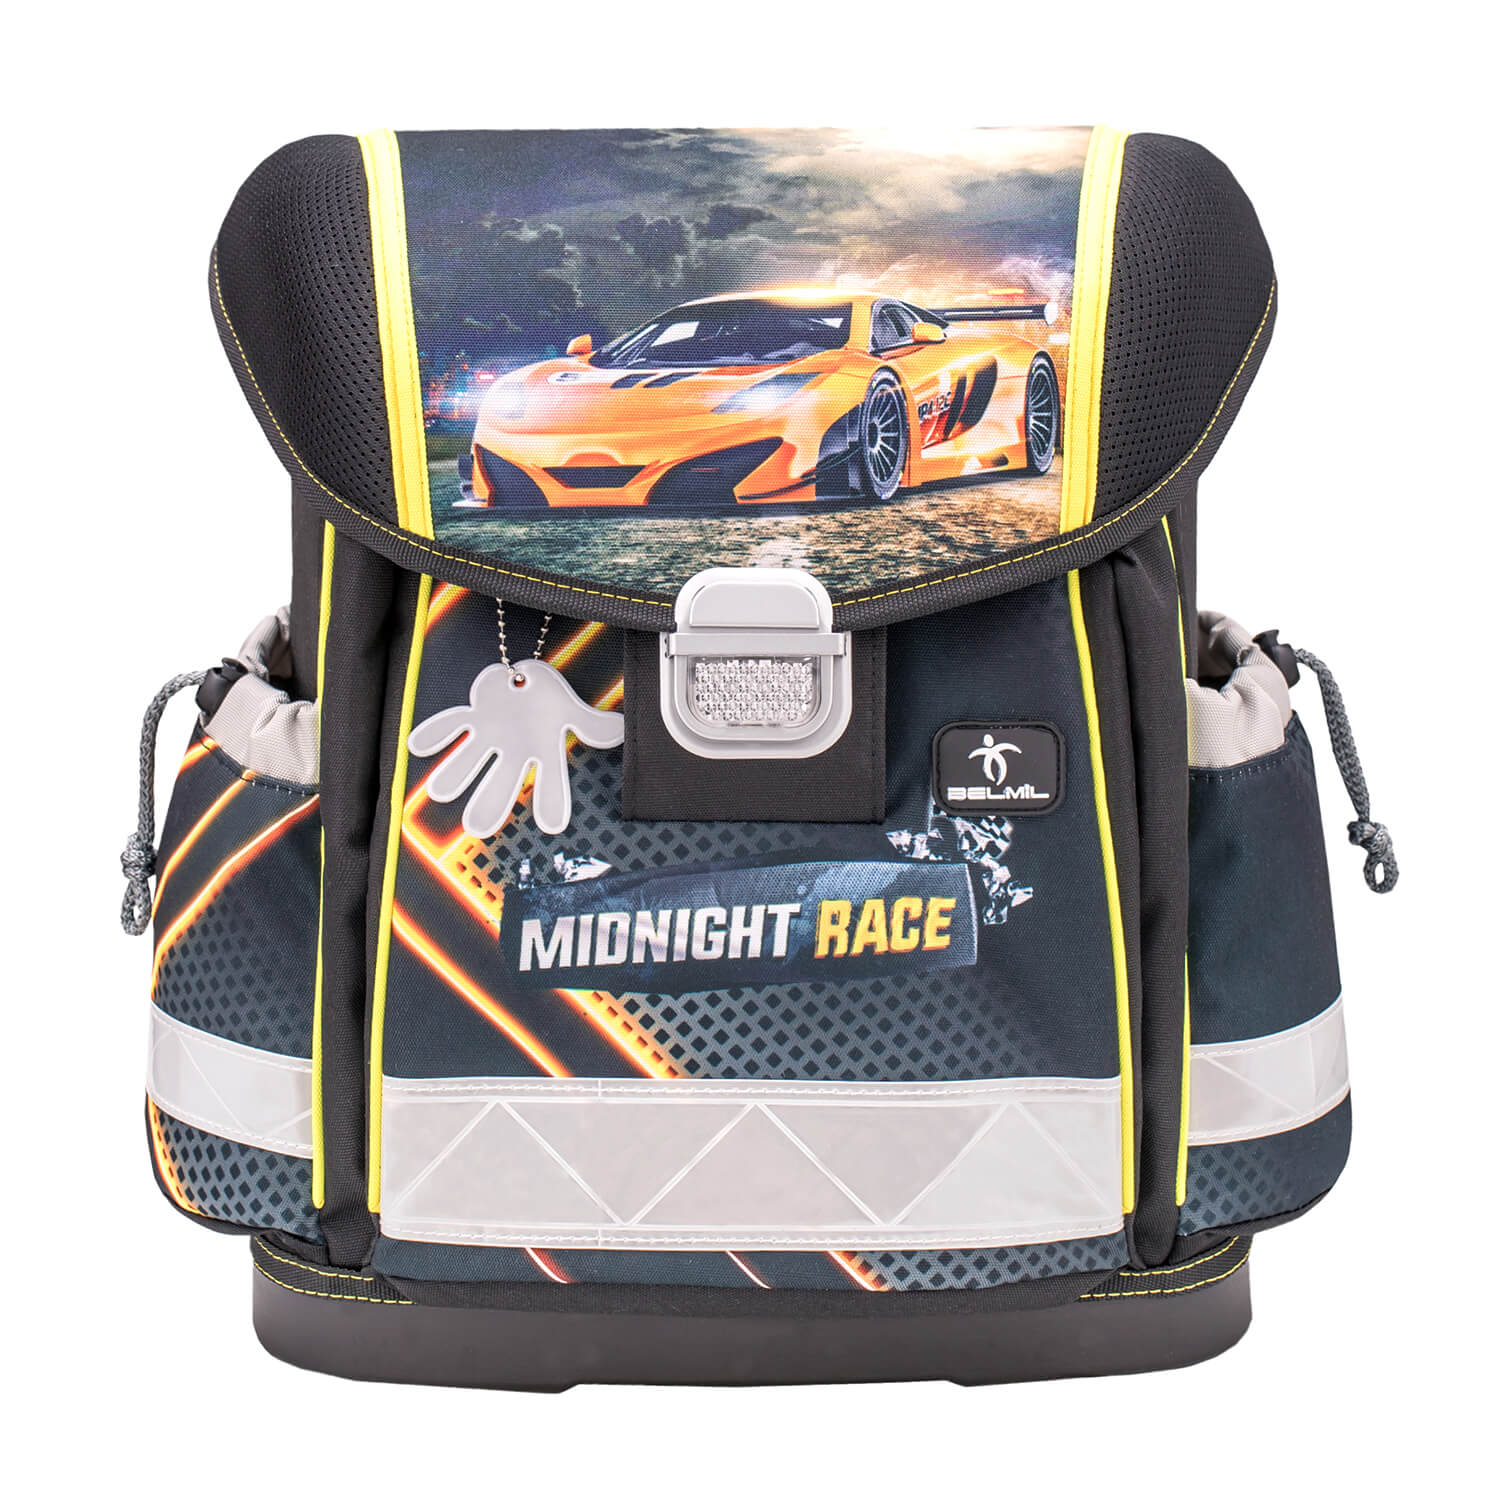 Classy Midnight Race schoolbag set 4 pcs